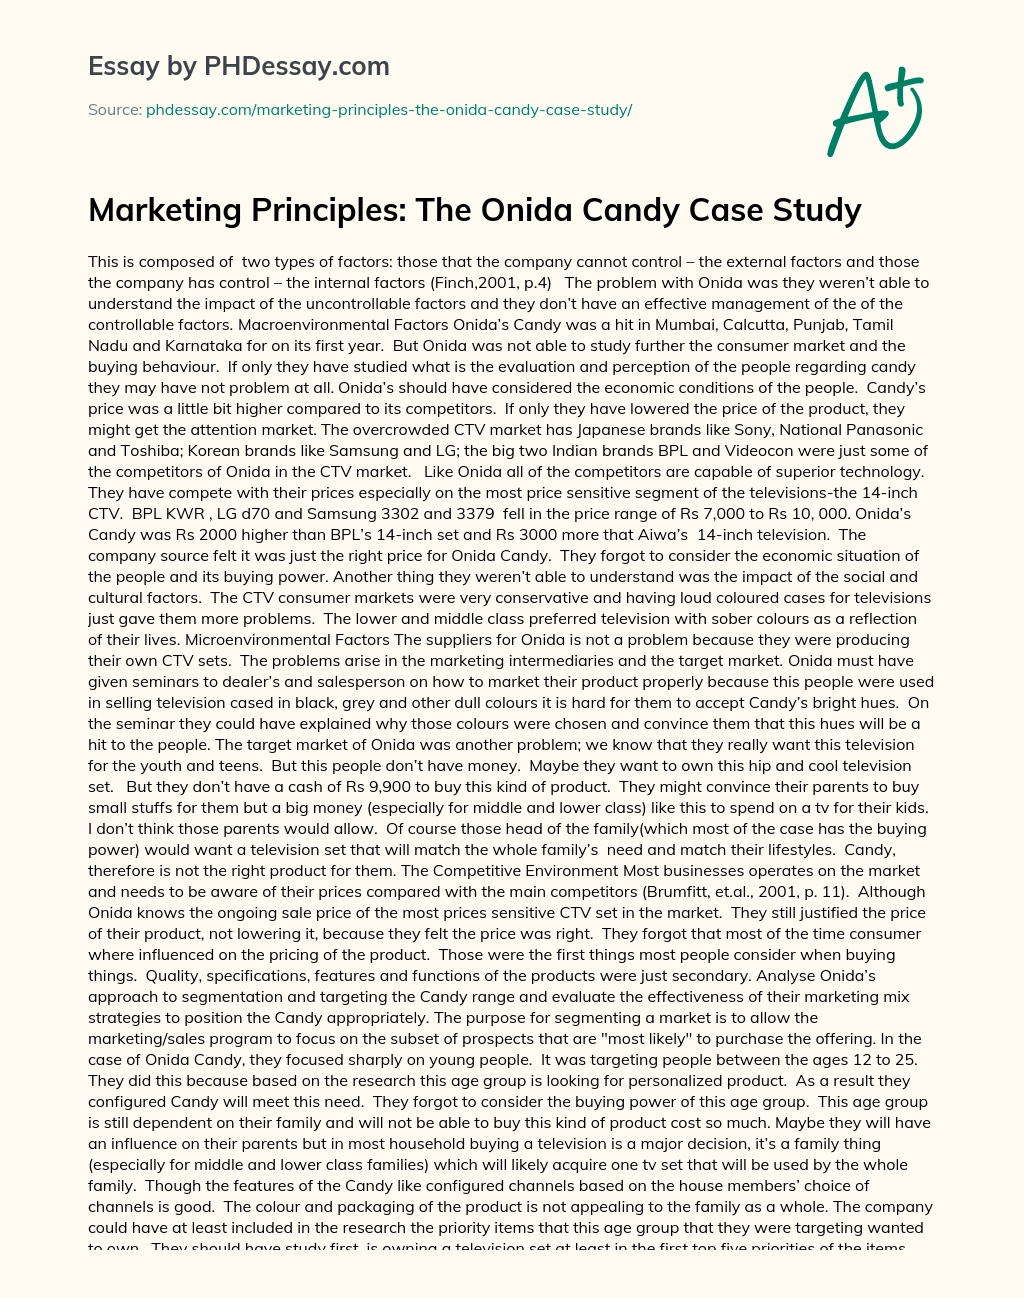 Marketing Principles: The Onida Candy Case Study essay